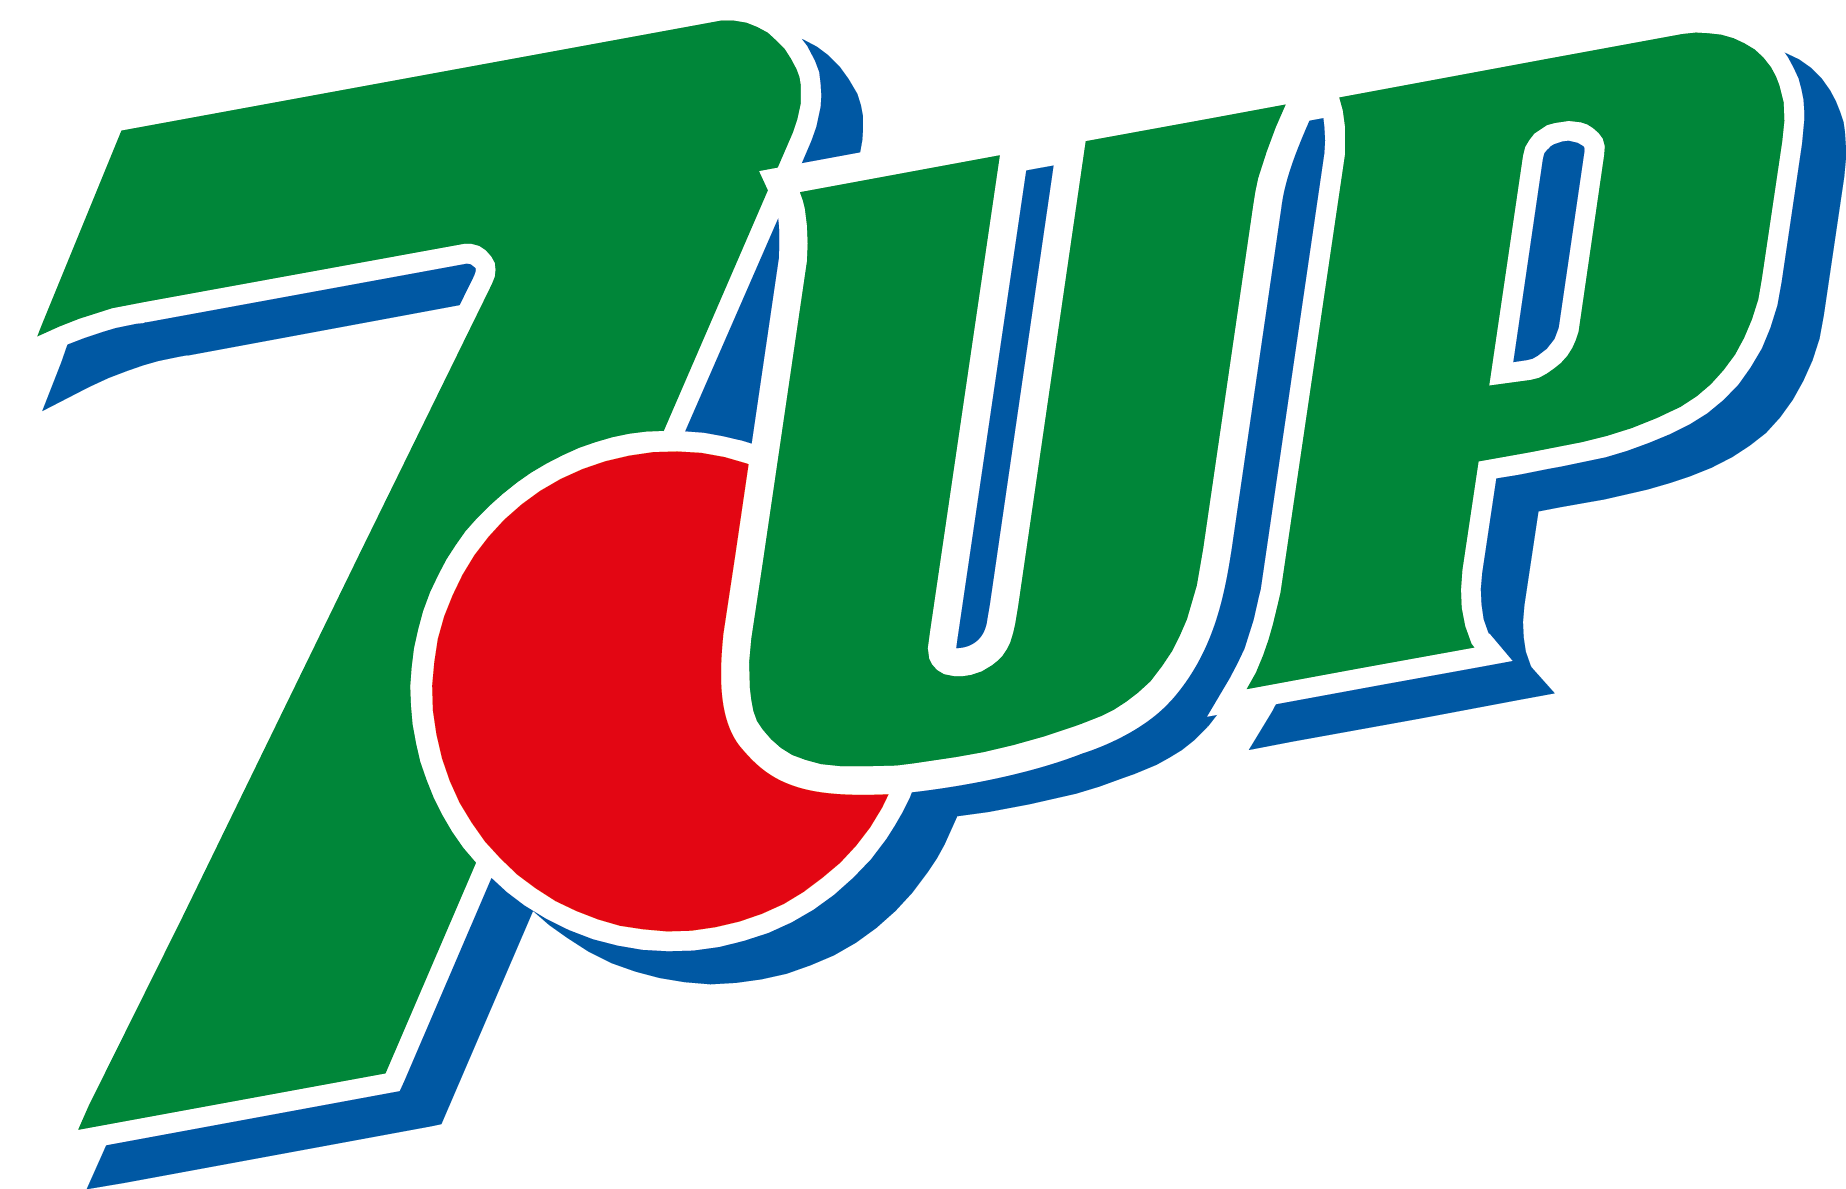 7 Up Logo - 7Up Logo [Seven Up] Vector Free Download